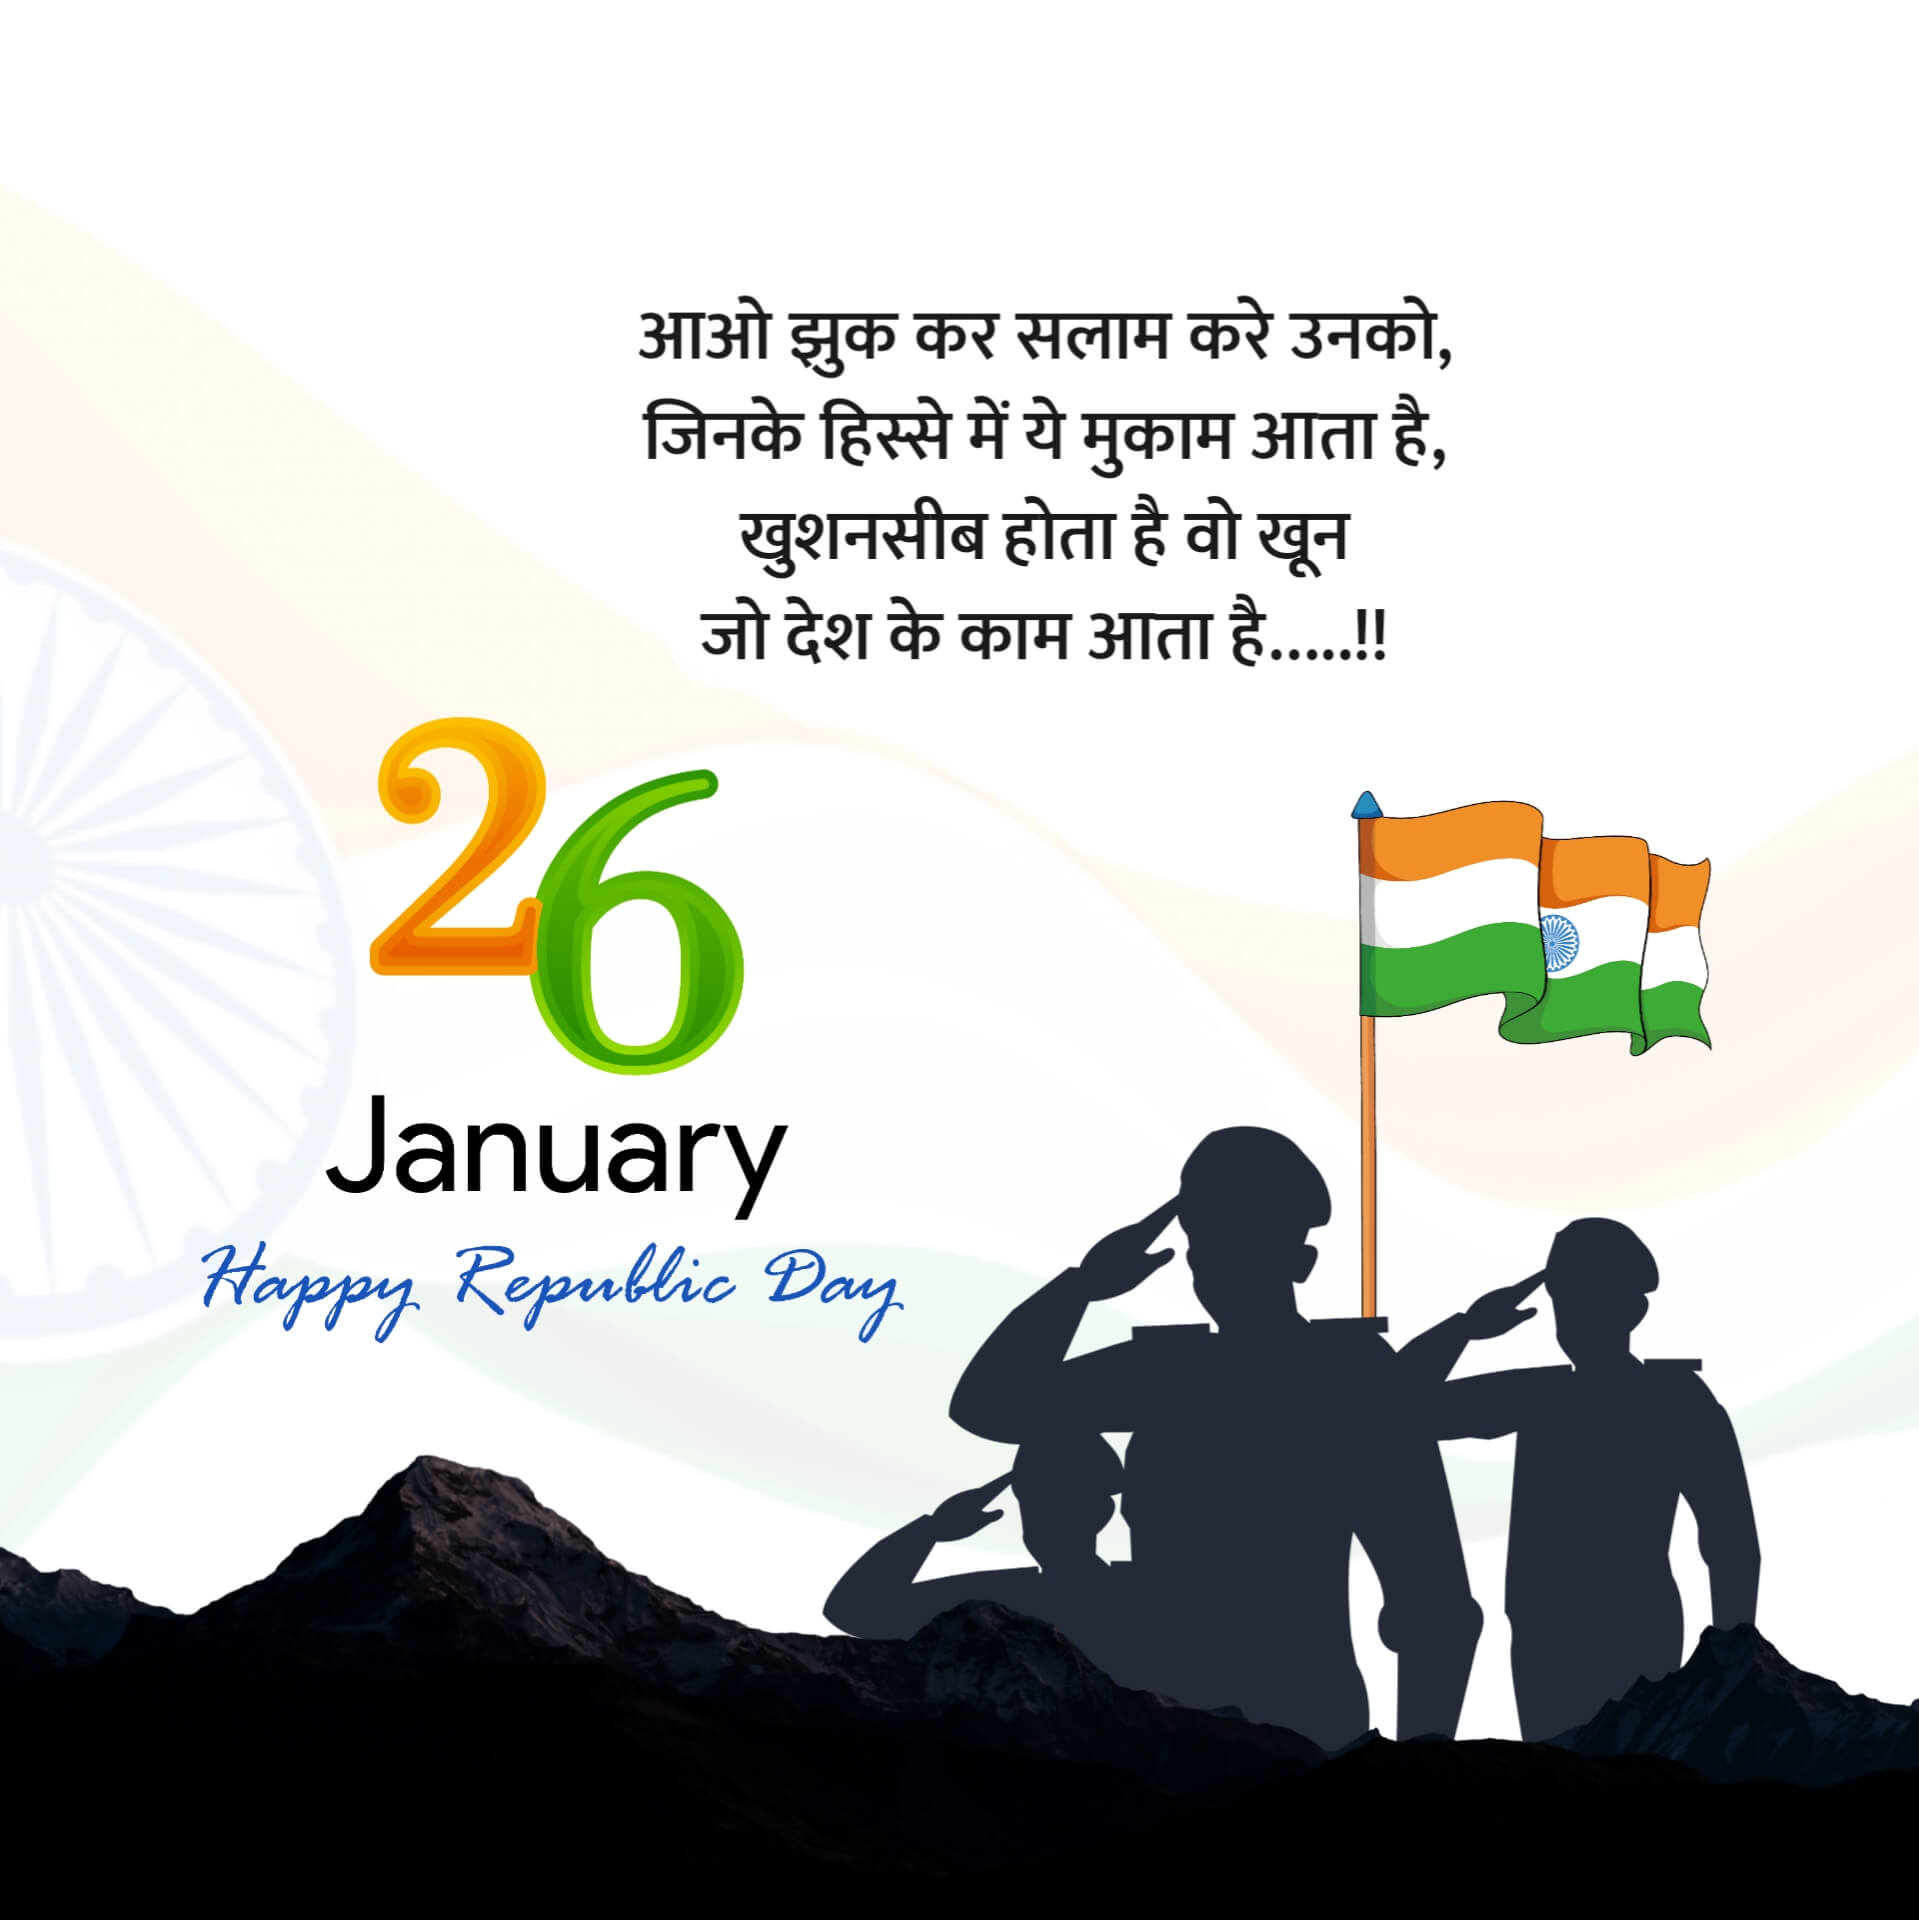 Hindi Republic Day Images